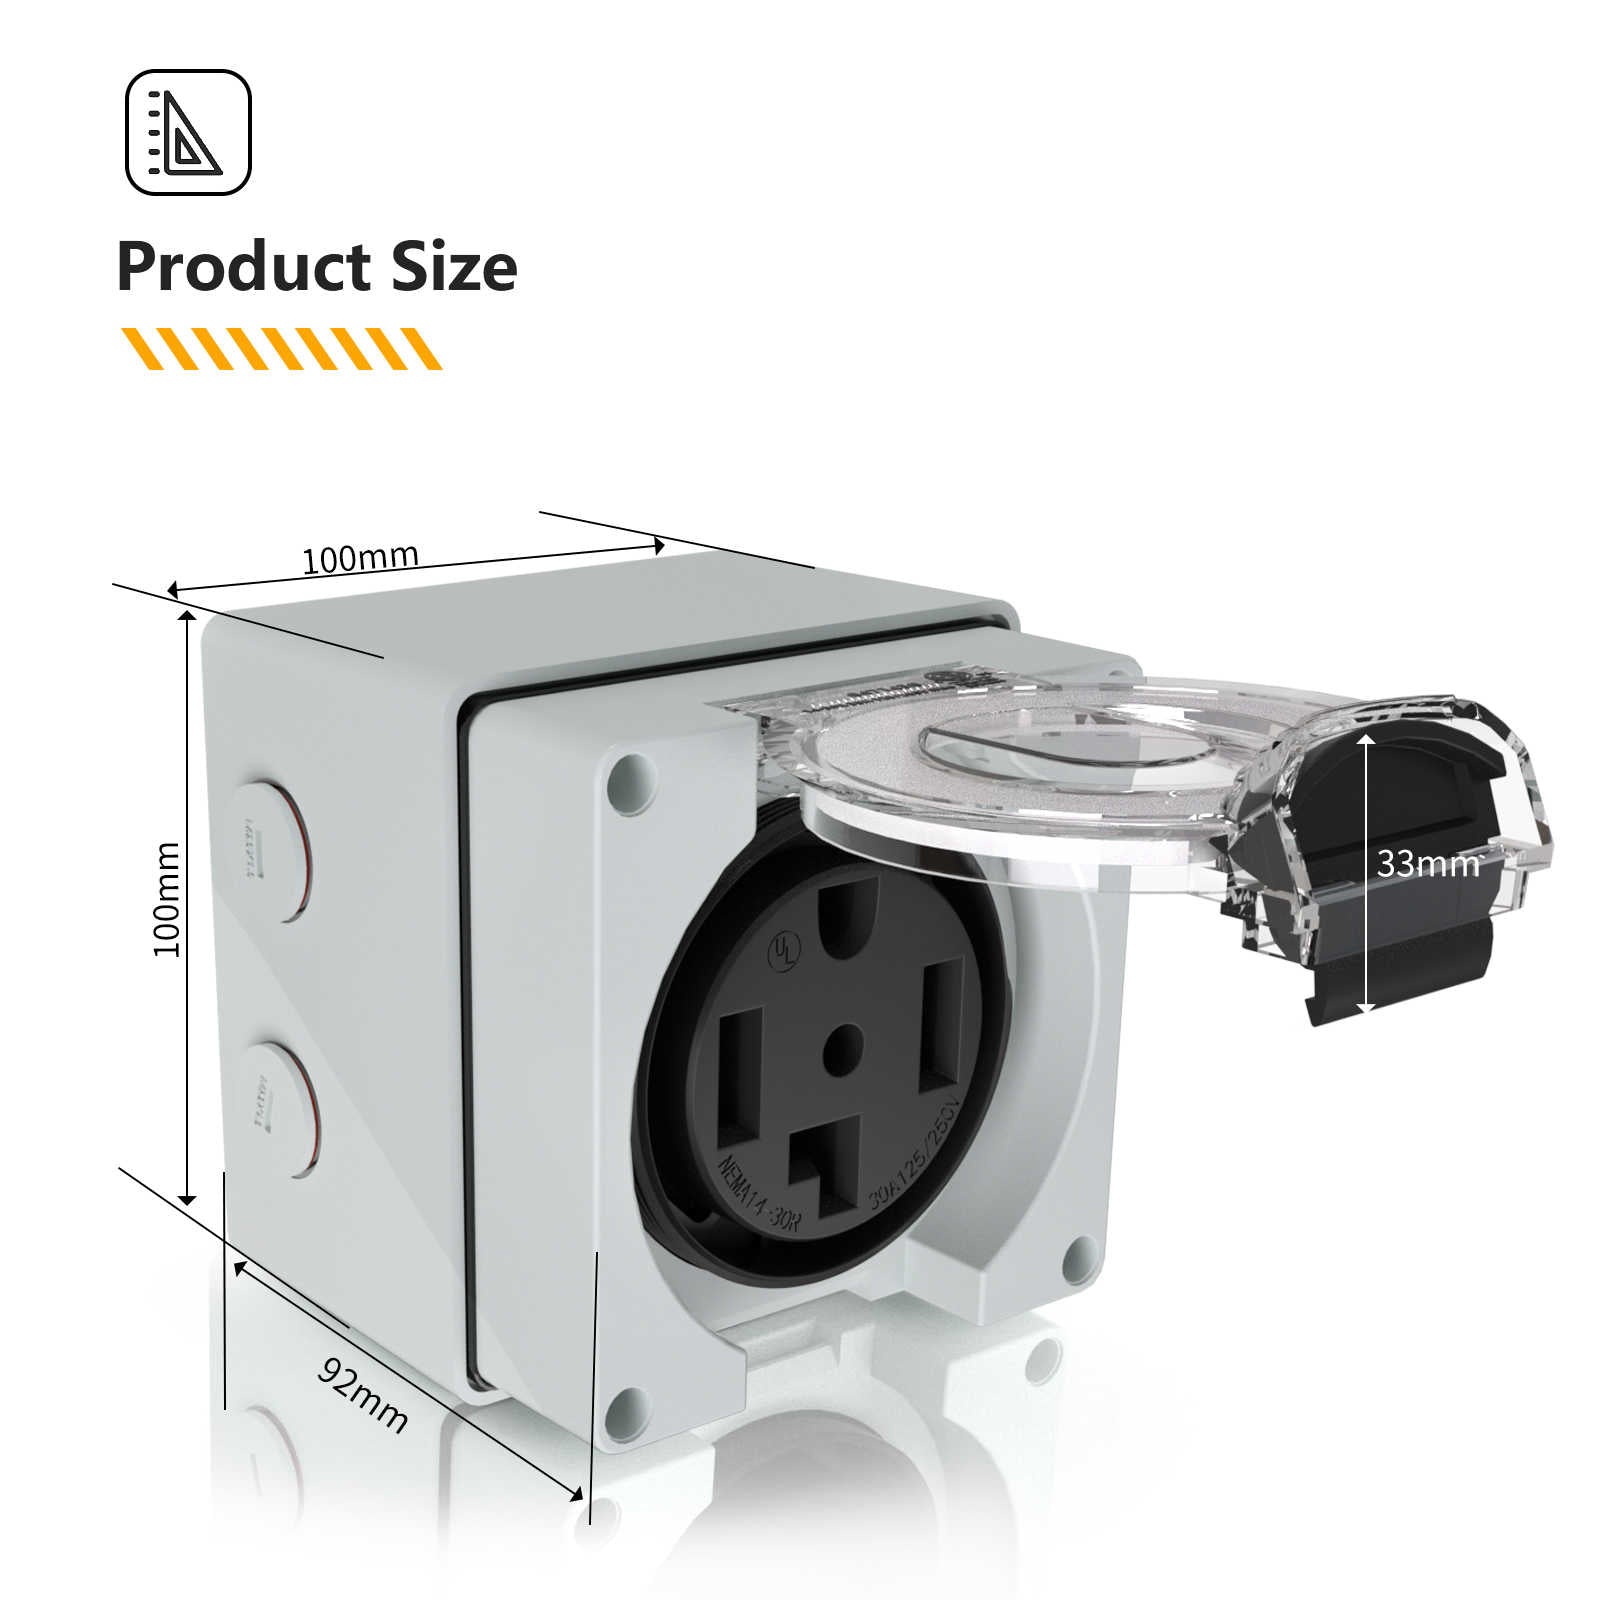 NEMA 14-30R 30Amp Power Outlet Box precise product size